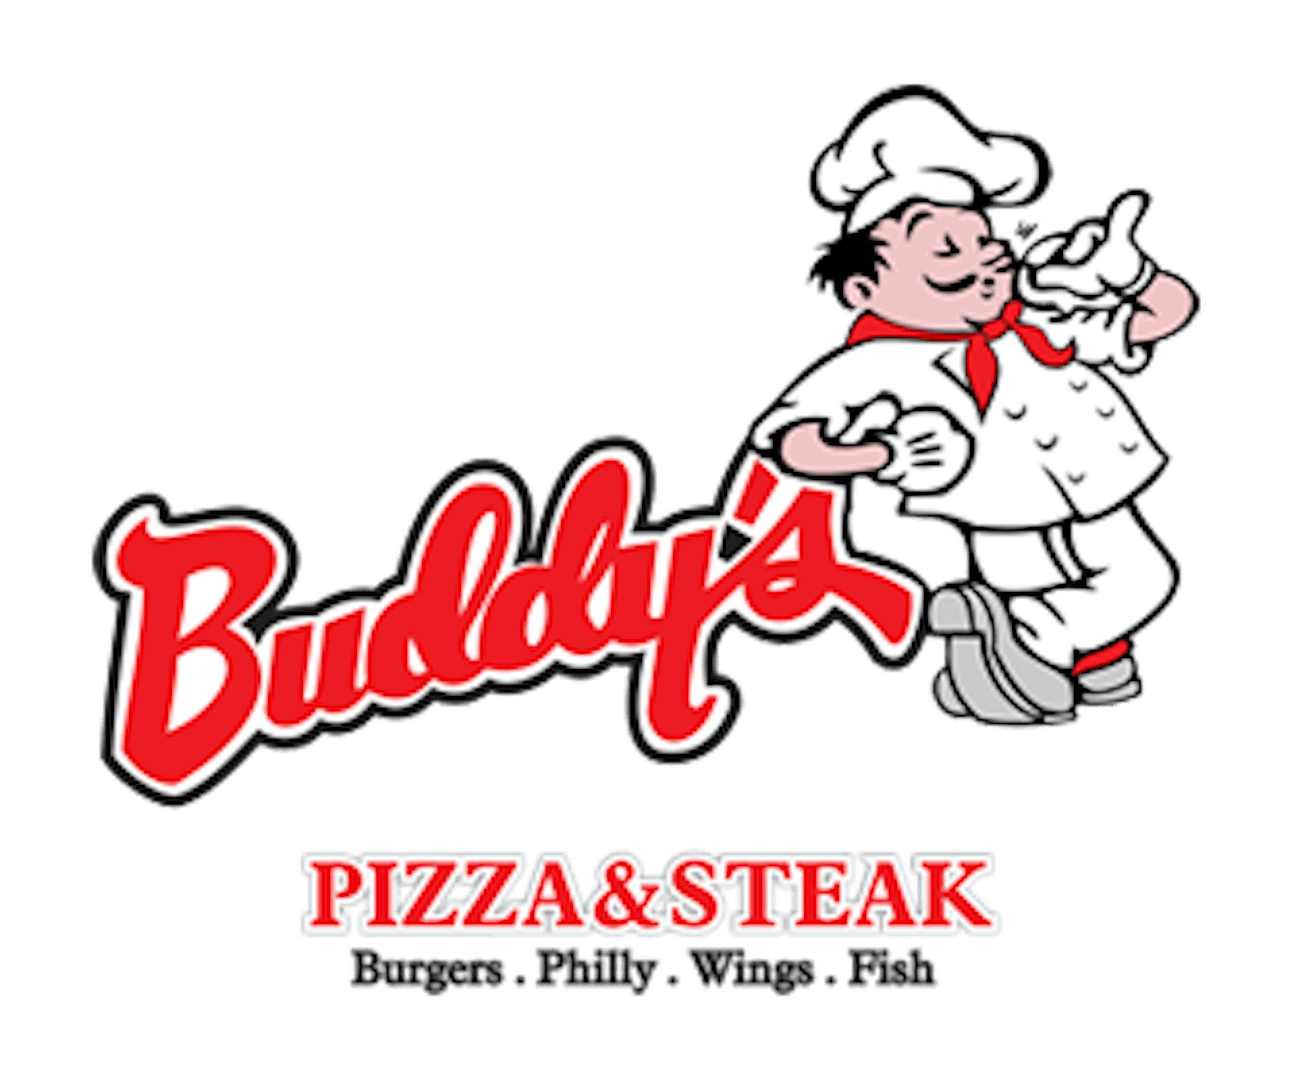 Buddys Pizza & Steak